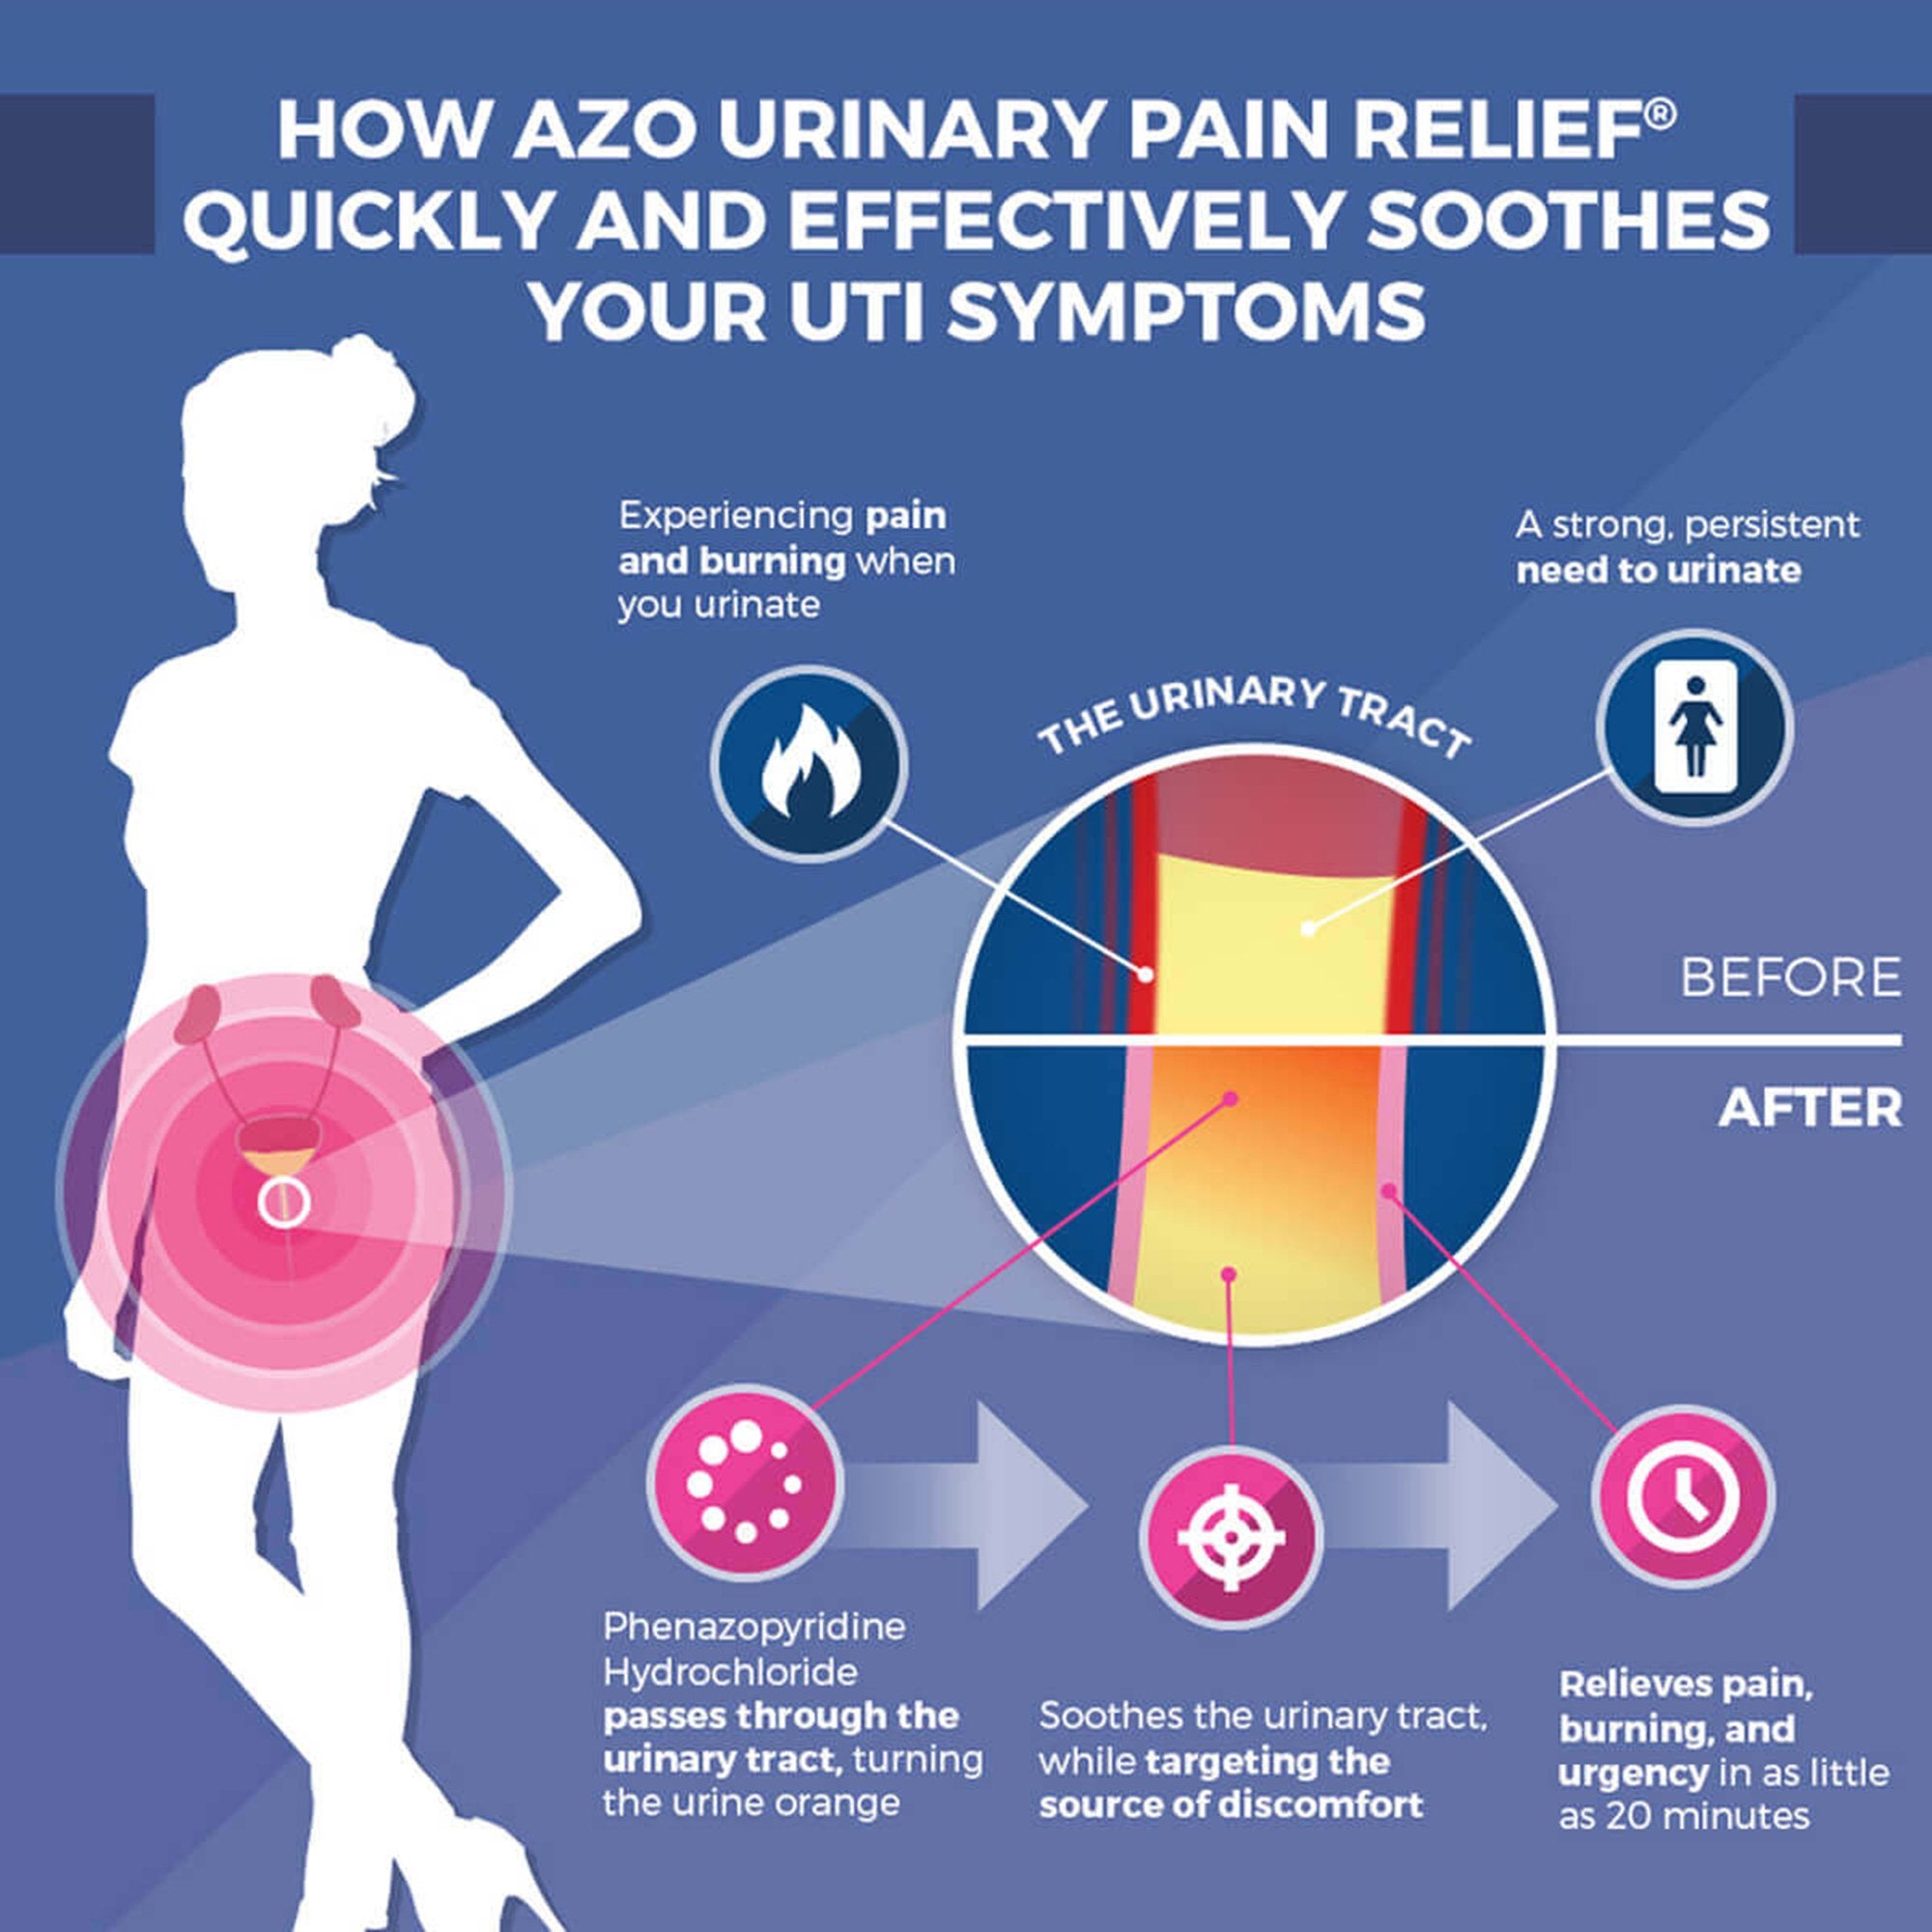 Urinary Pain Relief AZO Maximum Strength 99.5 mg Strength Phenazopyridine HCL Tablet 12 per Box